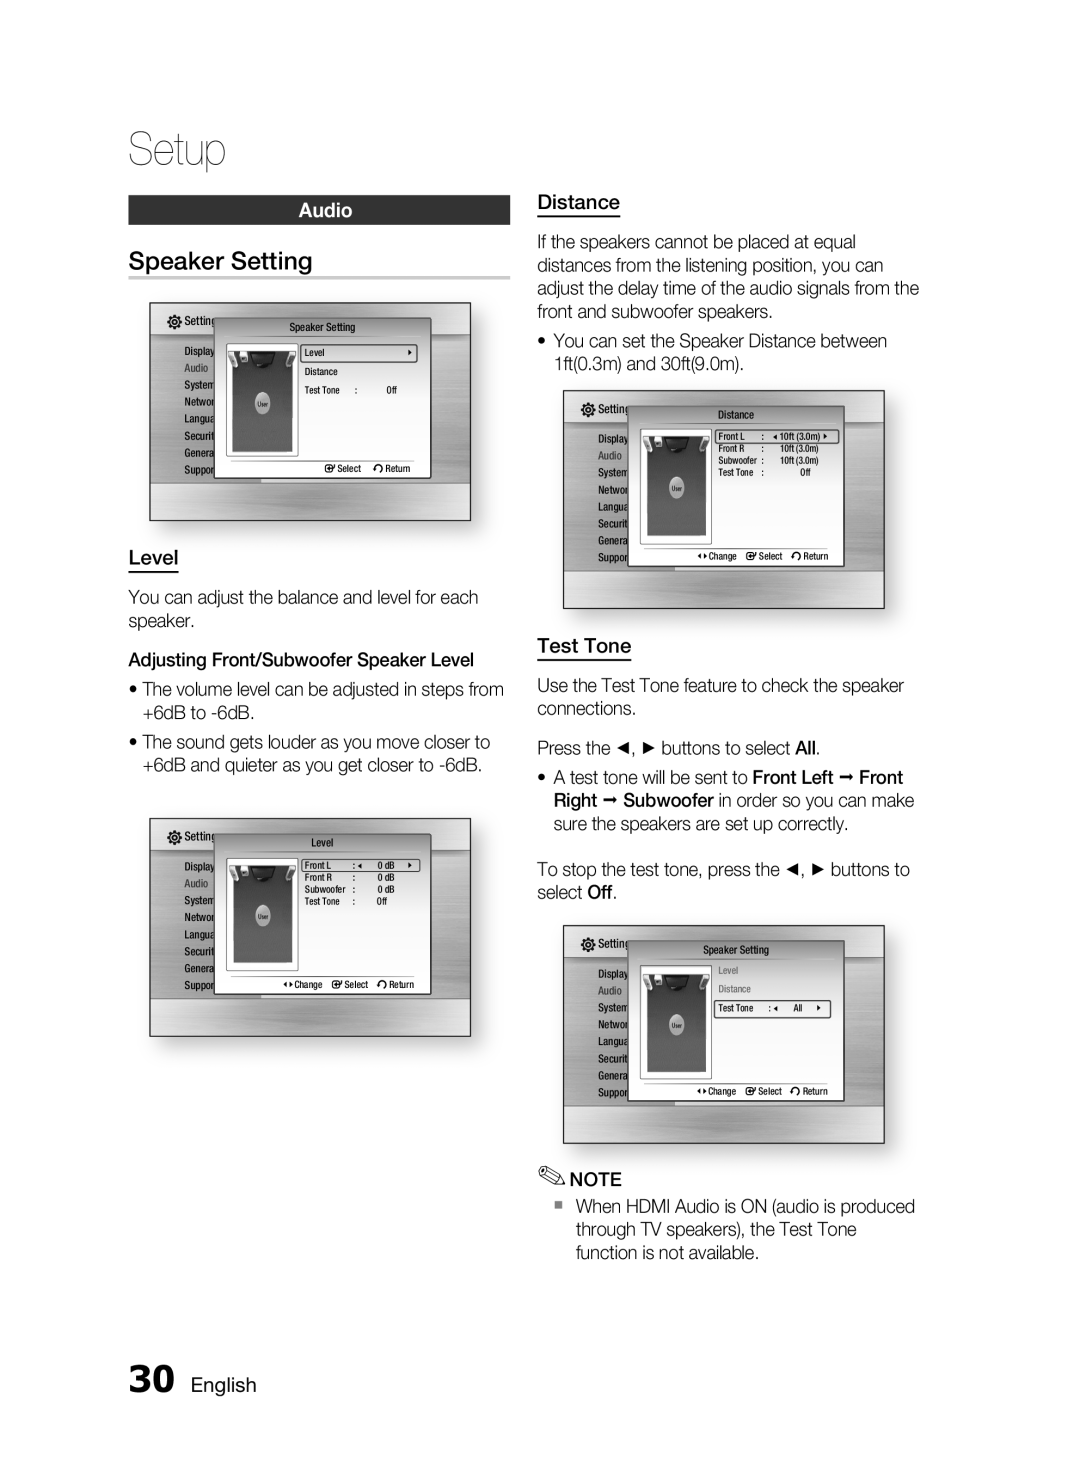 Samsung HT-C5200 user manual Speaker Setting, Audio, Level, Distance, Test Tone, English, Setup 